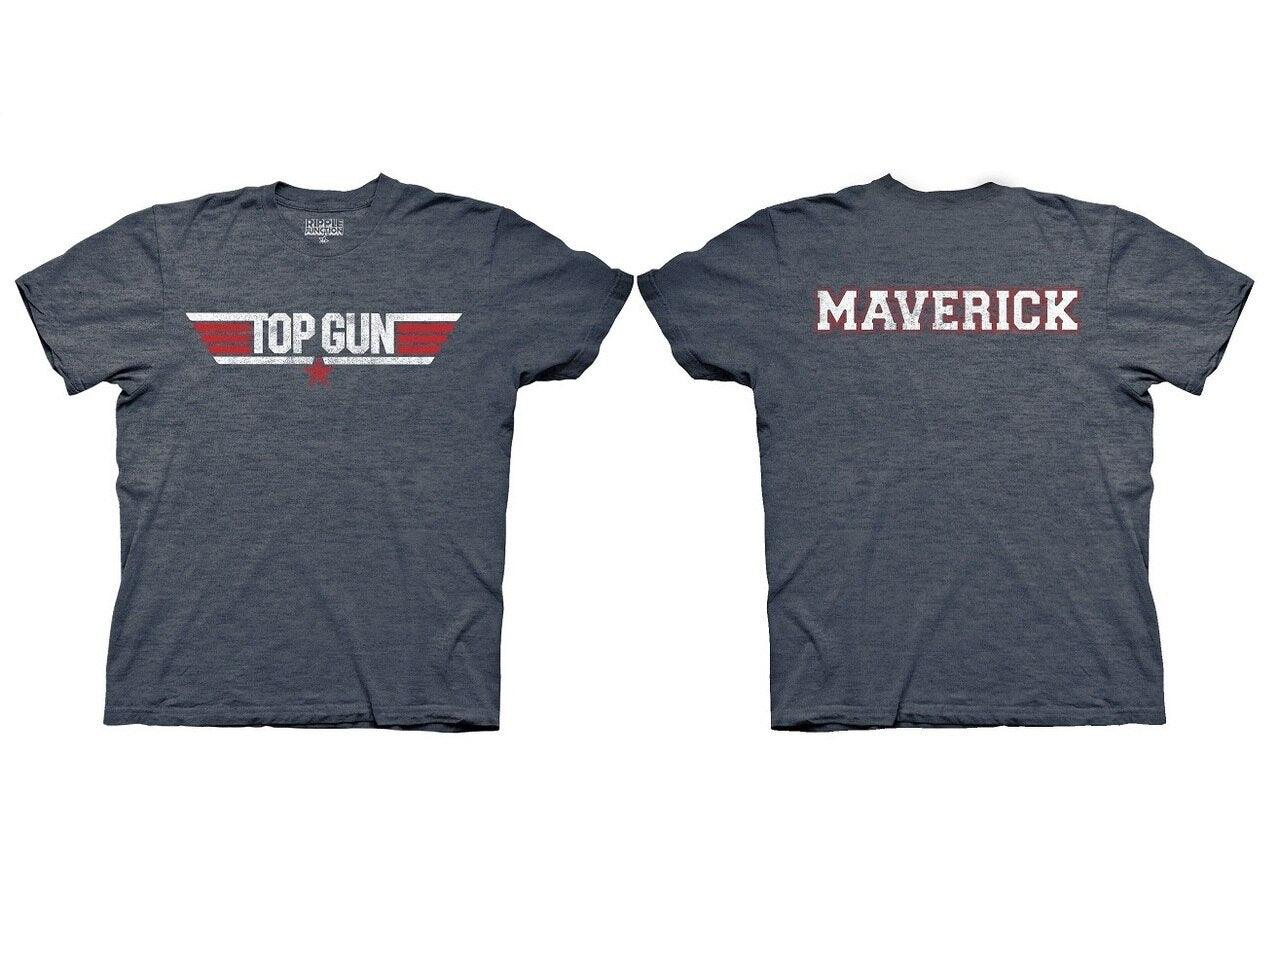 Tom Cruise Top Gun Maverick Movie T-Shirt - Online Shoping